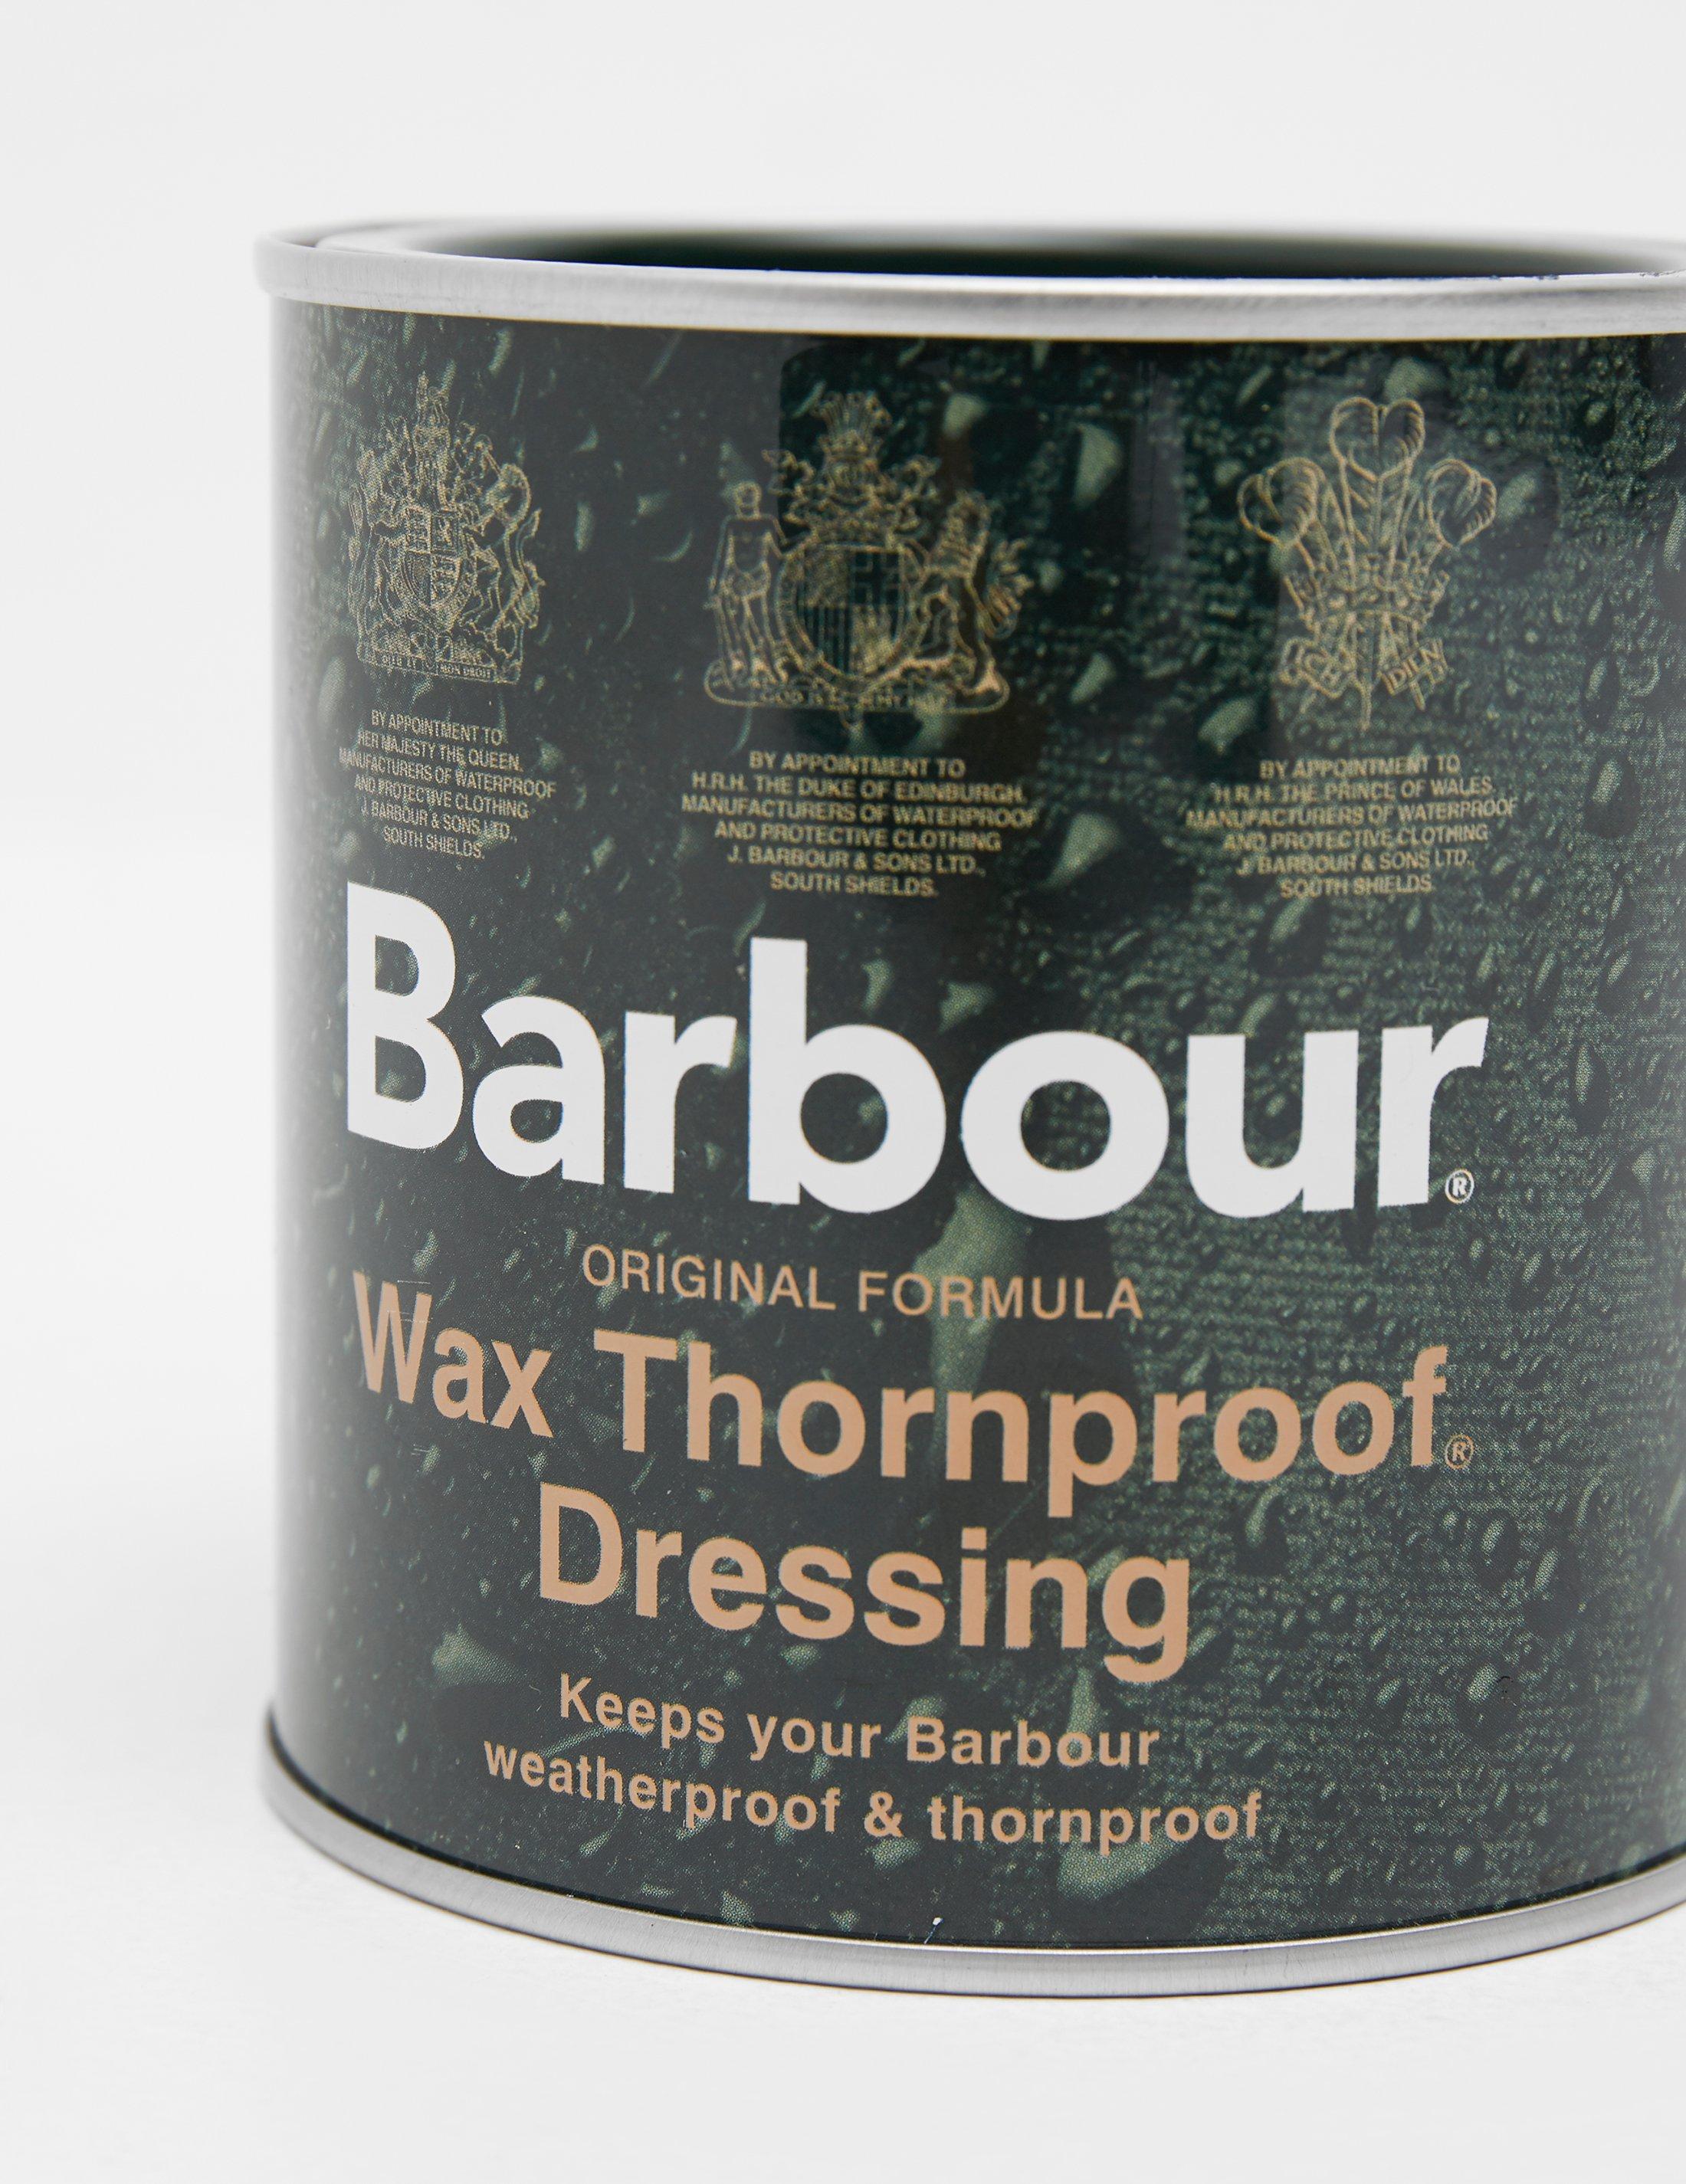 wax thornproof